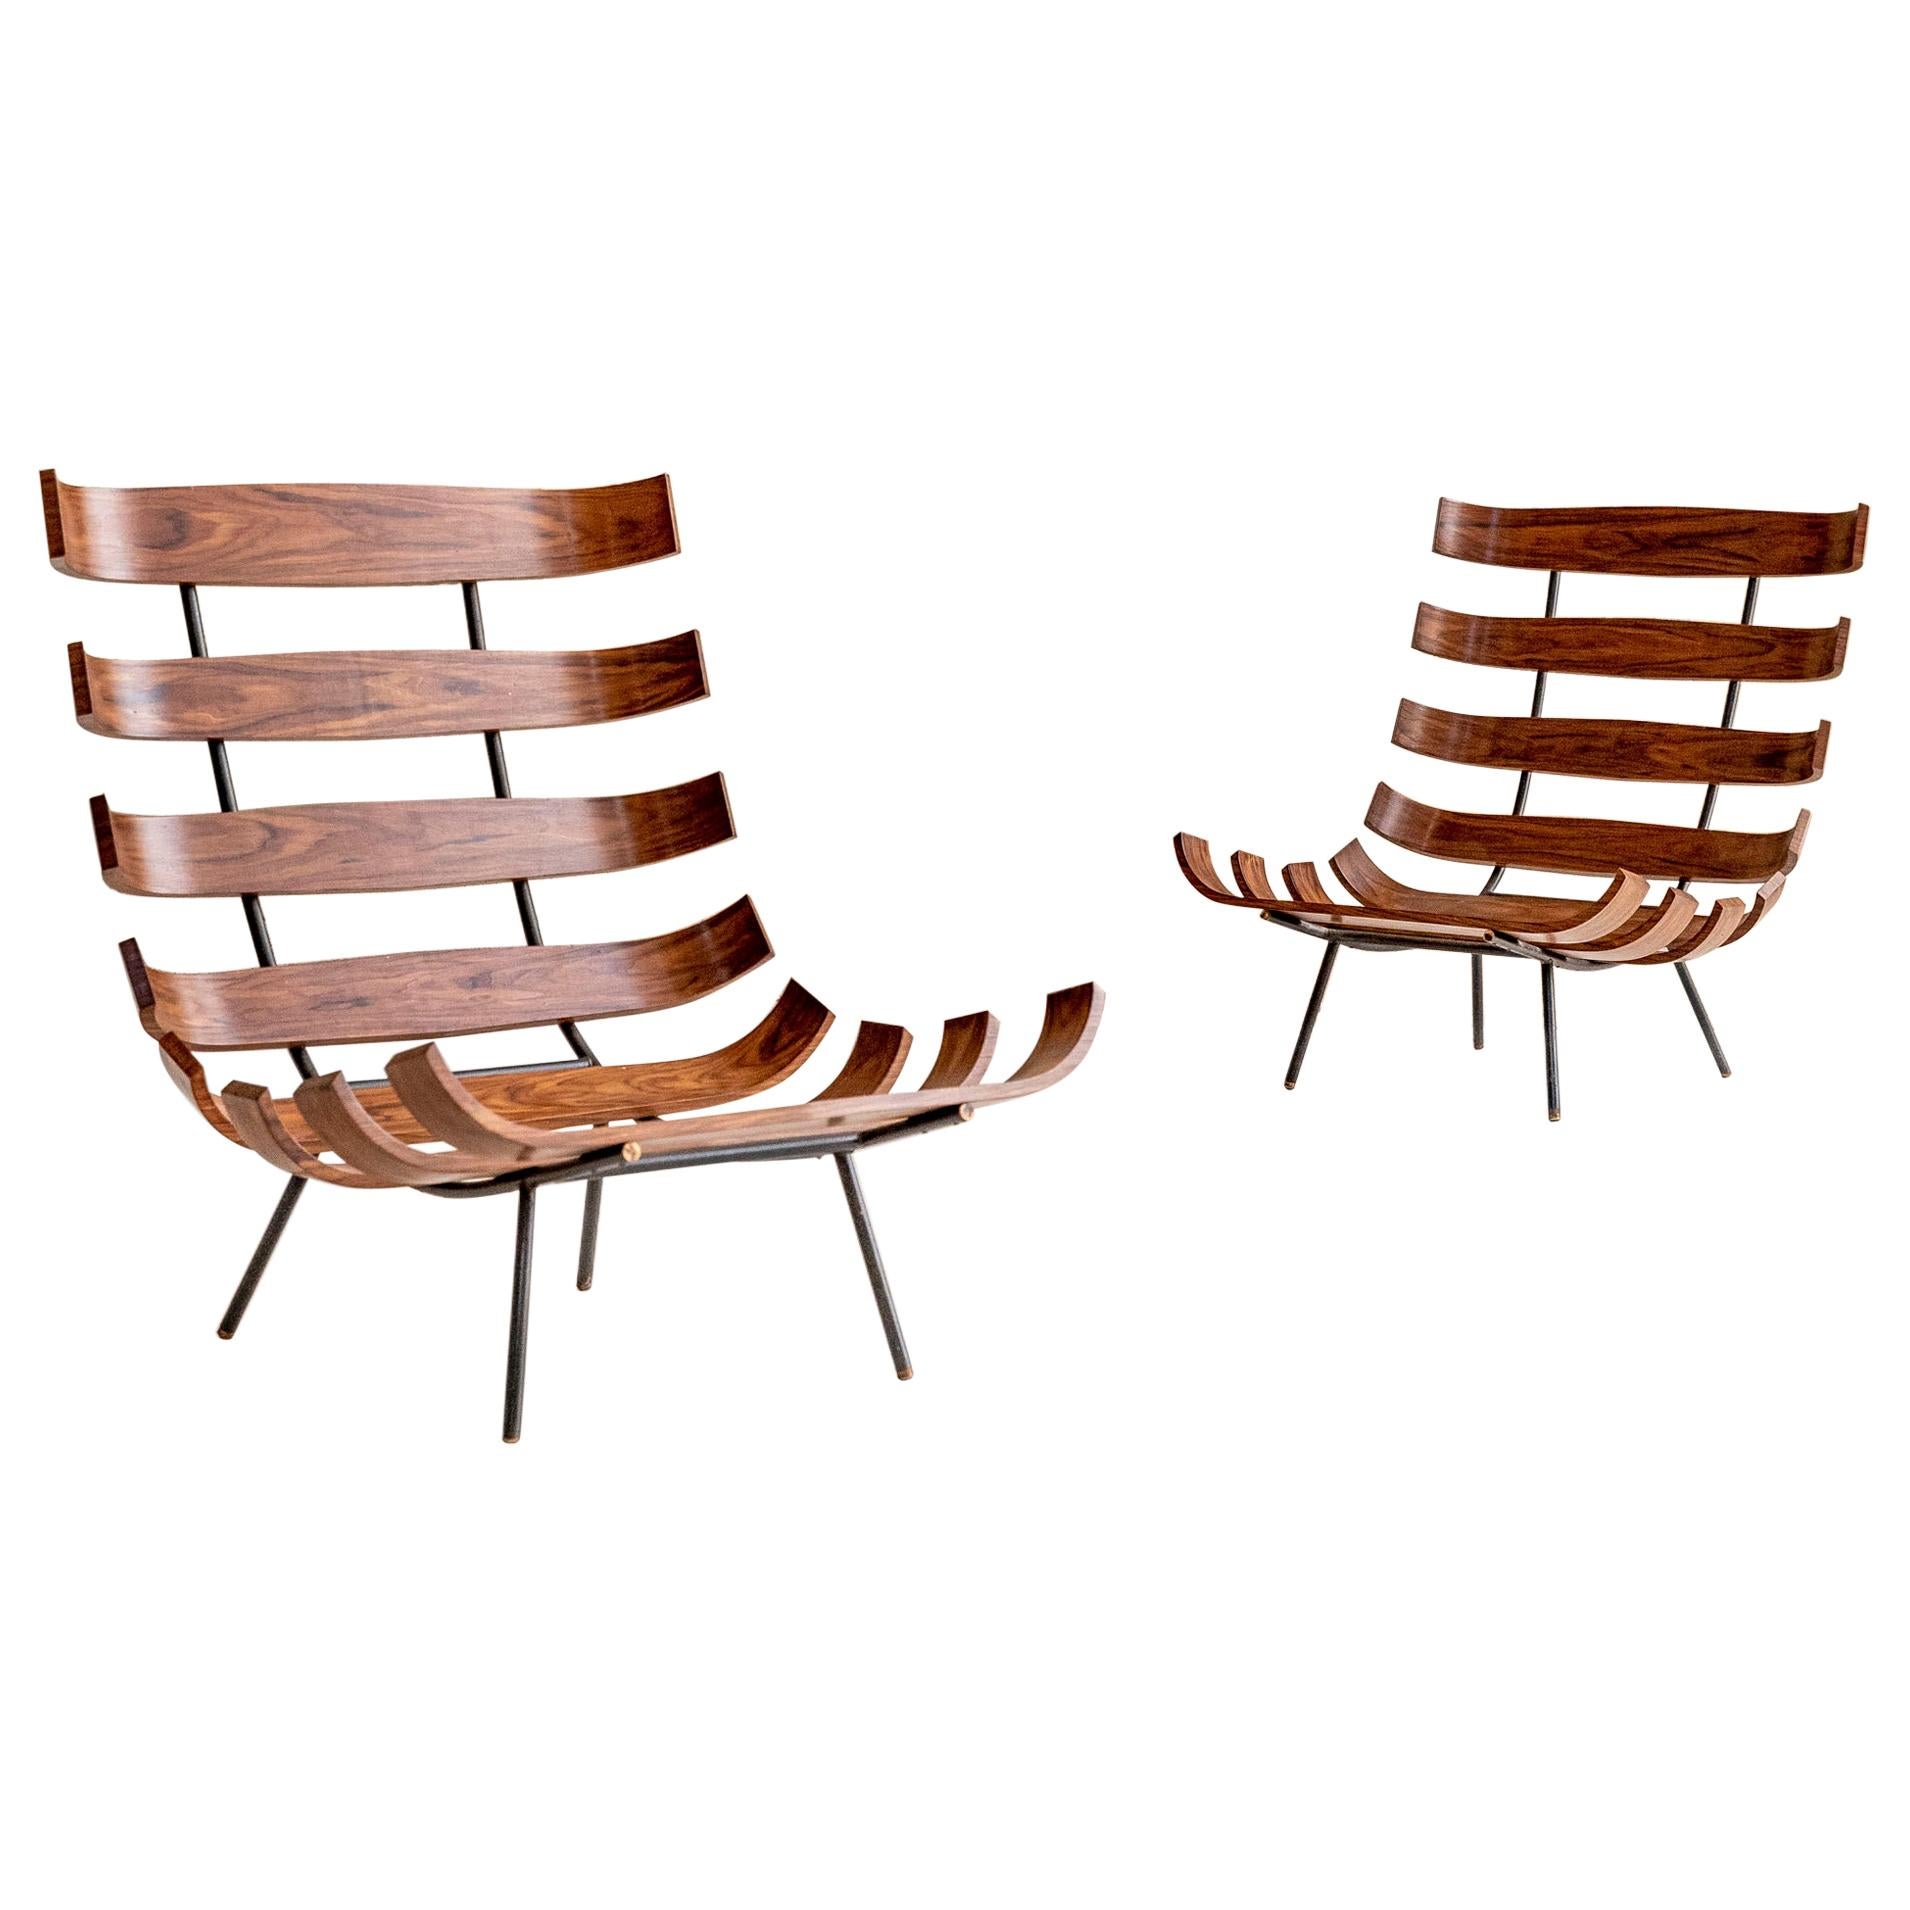 Carlo Hauner and Martin Eisler "Costela" Lounge Chairs